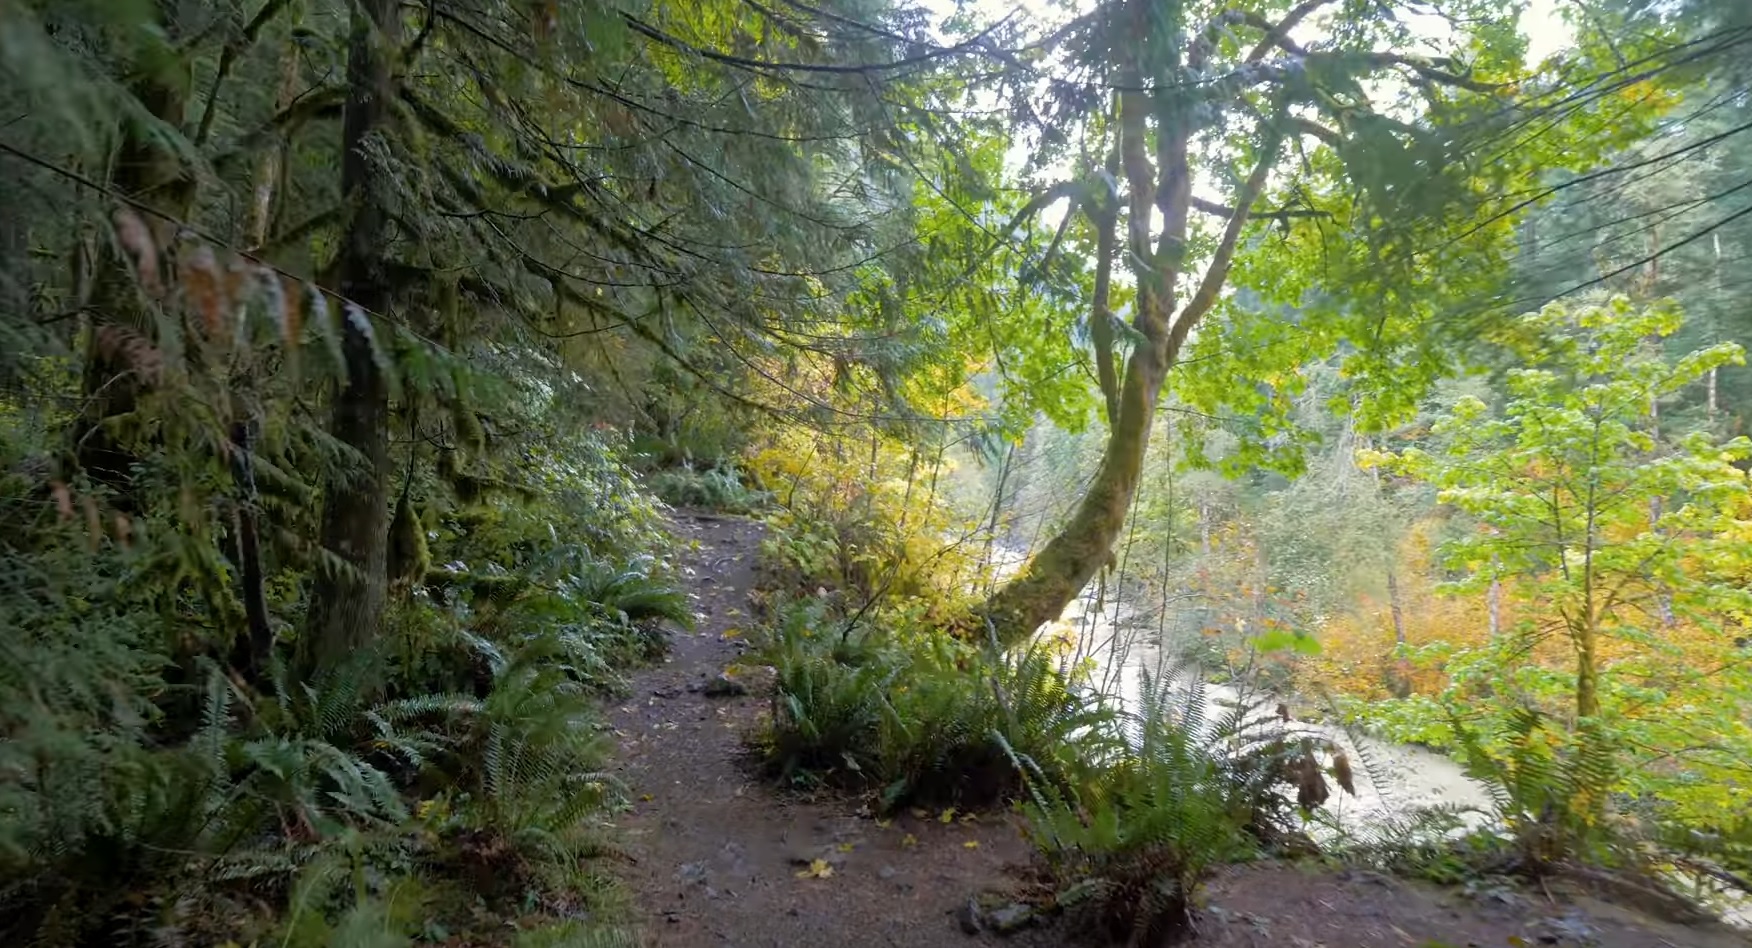 Relaxing Trail Walk In Autumn